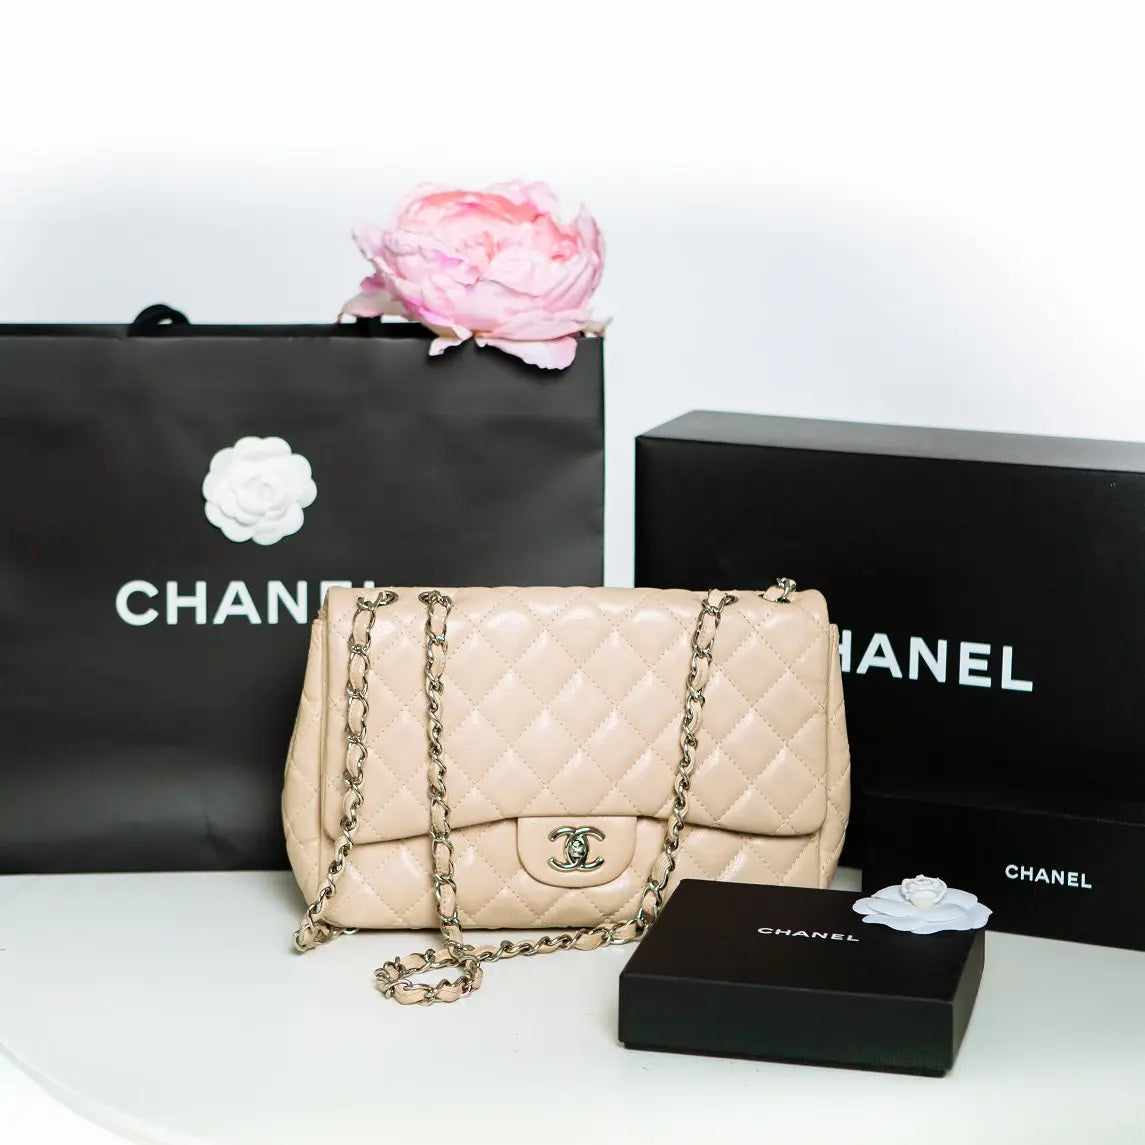 Chanel Classic Handbags Worldwide Price Increase 2019 (US, UK and Europe)